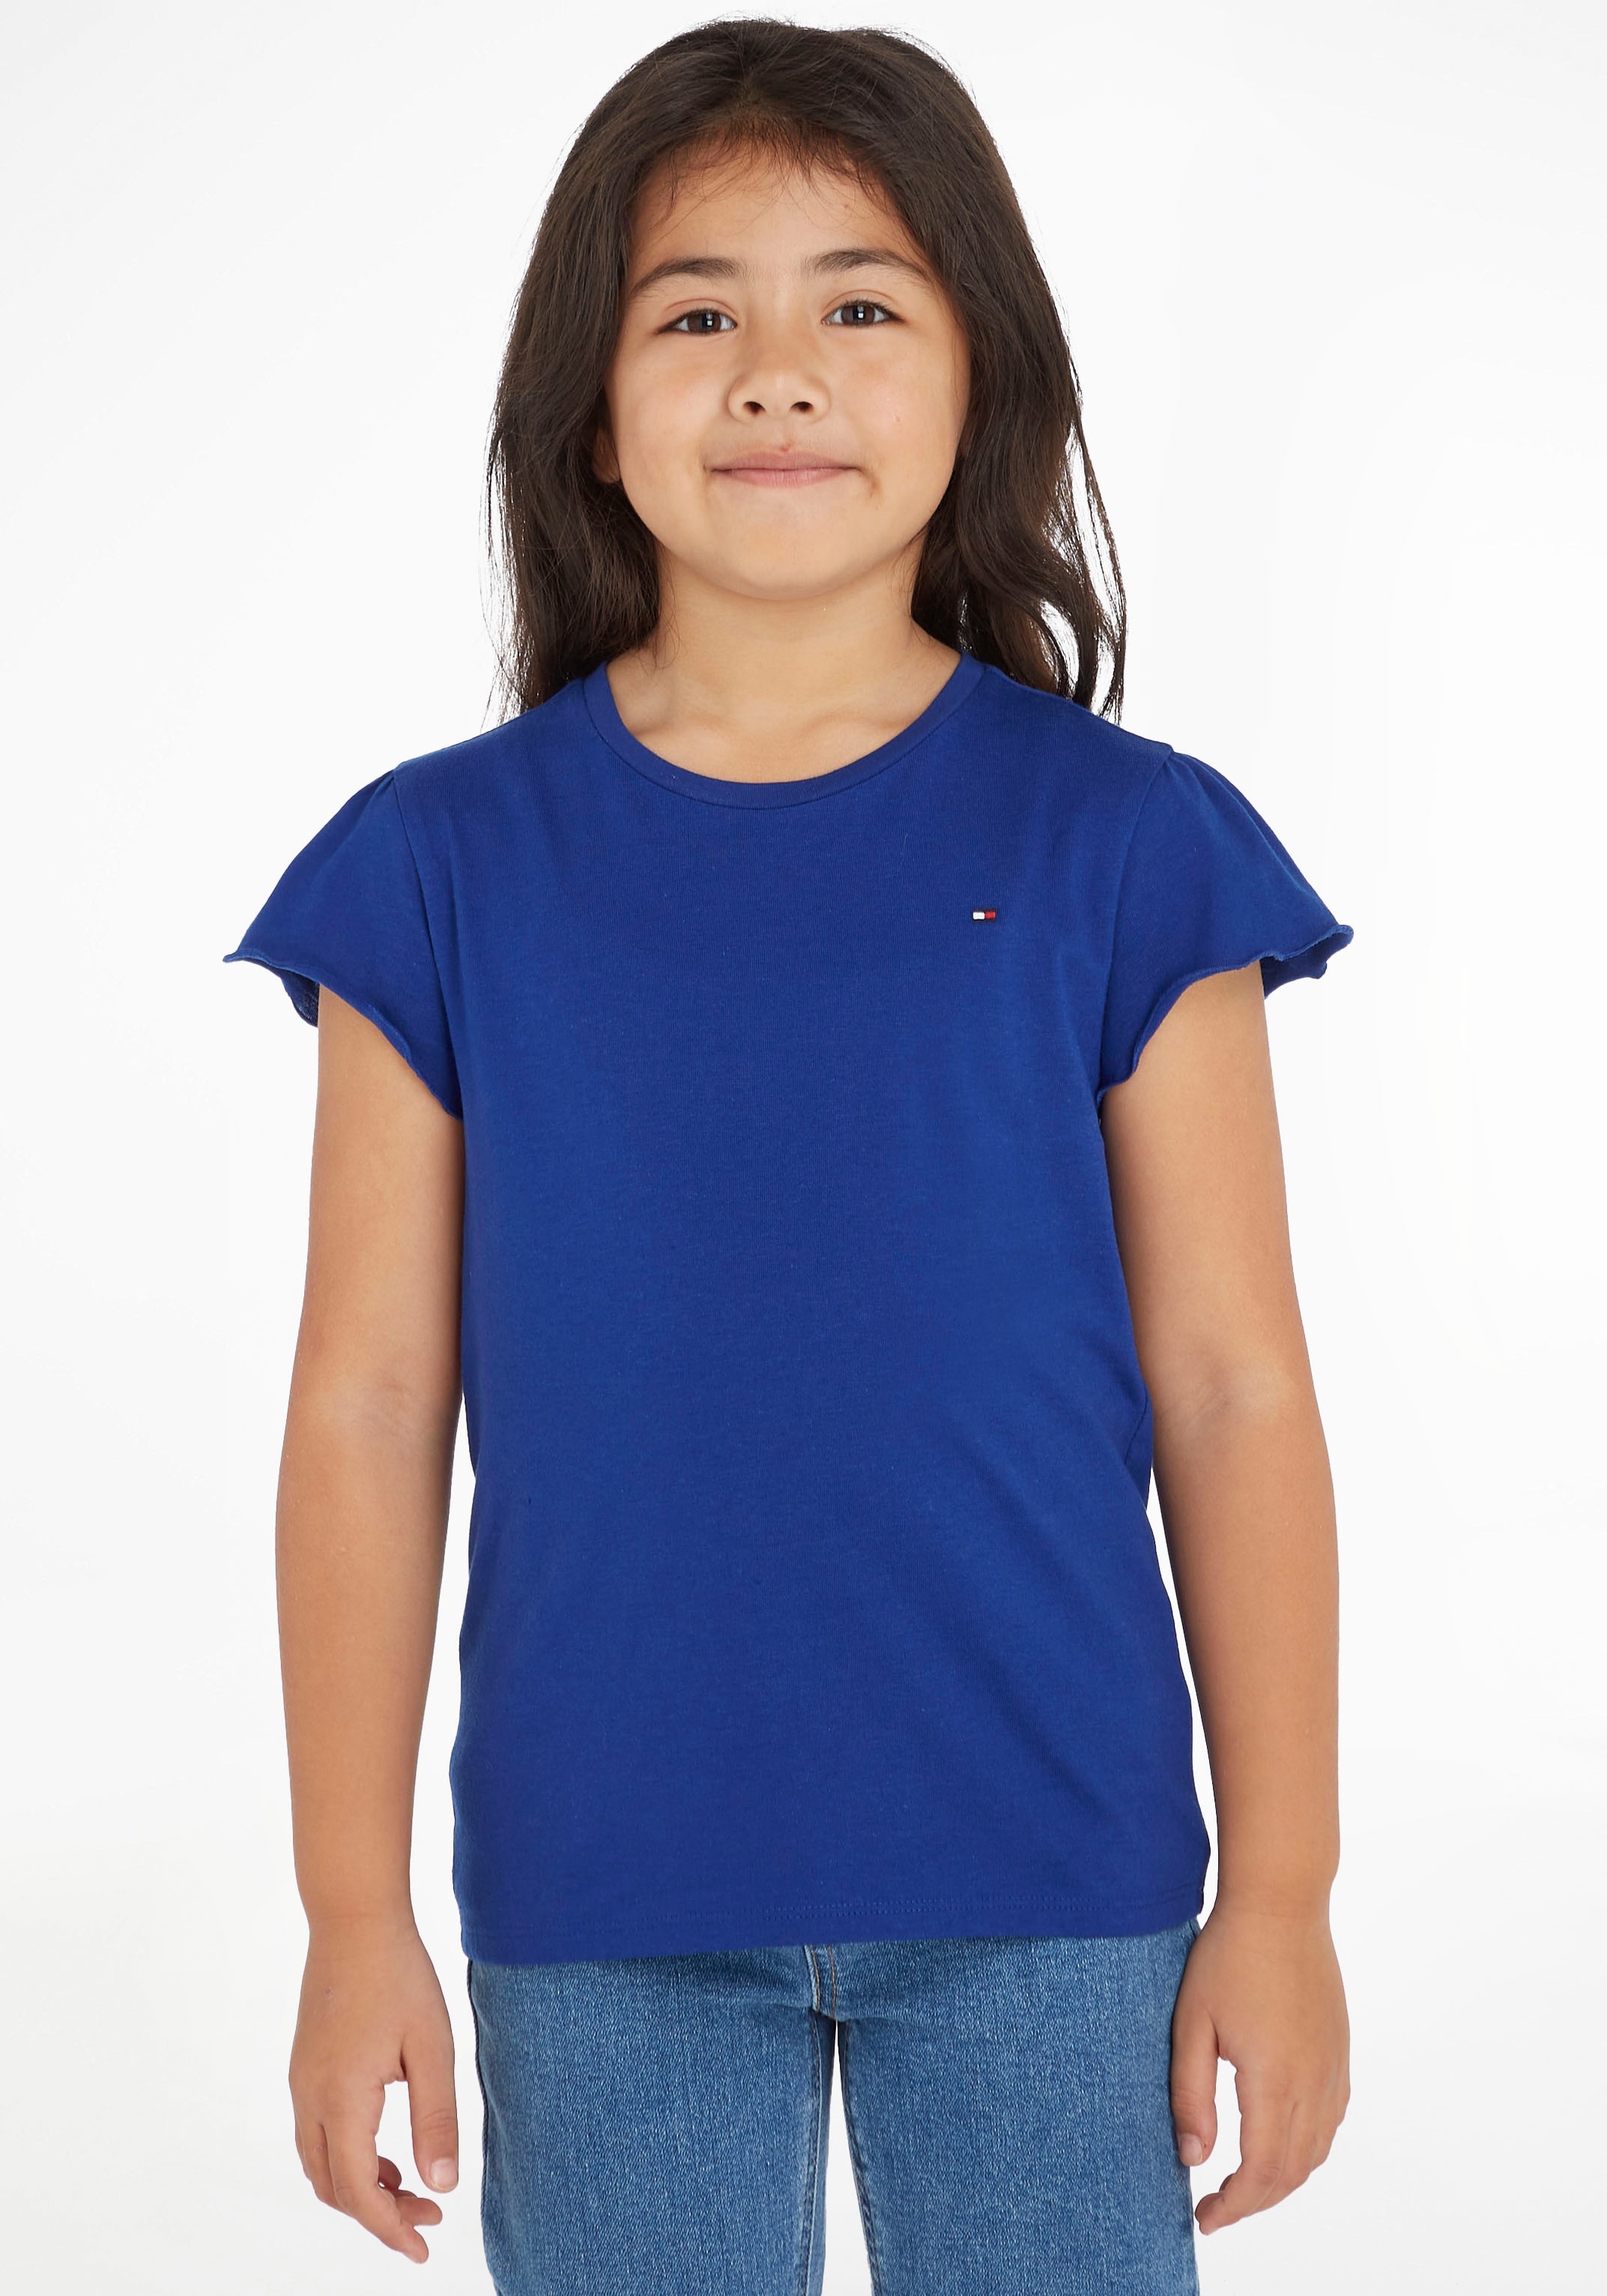 Tommy Hilfiger T-Shirt »ESSENTIAL RUFFLE SLEEVE TOP S/S«, Kinder Kids Junior MiniMe,mit dezentem Label